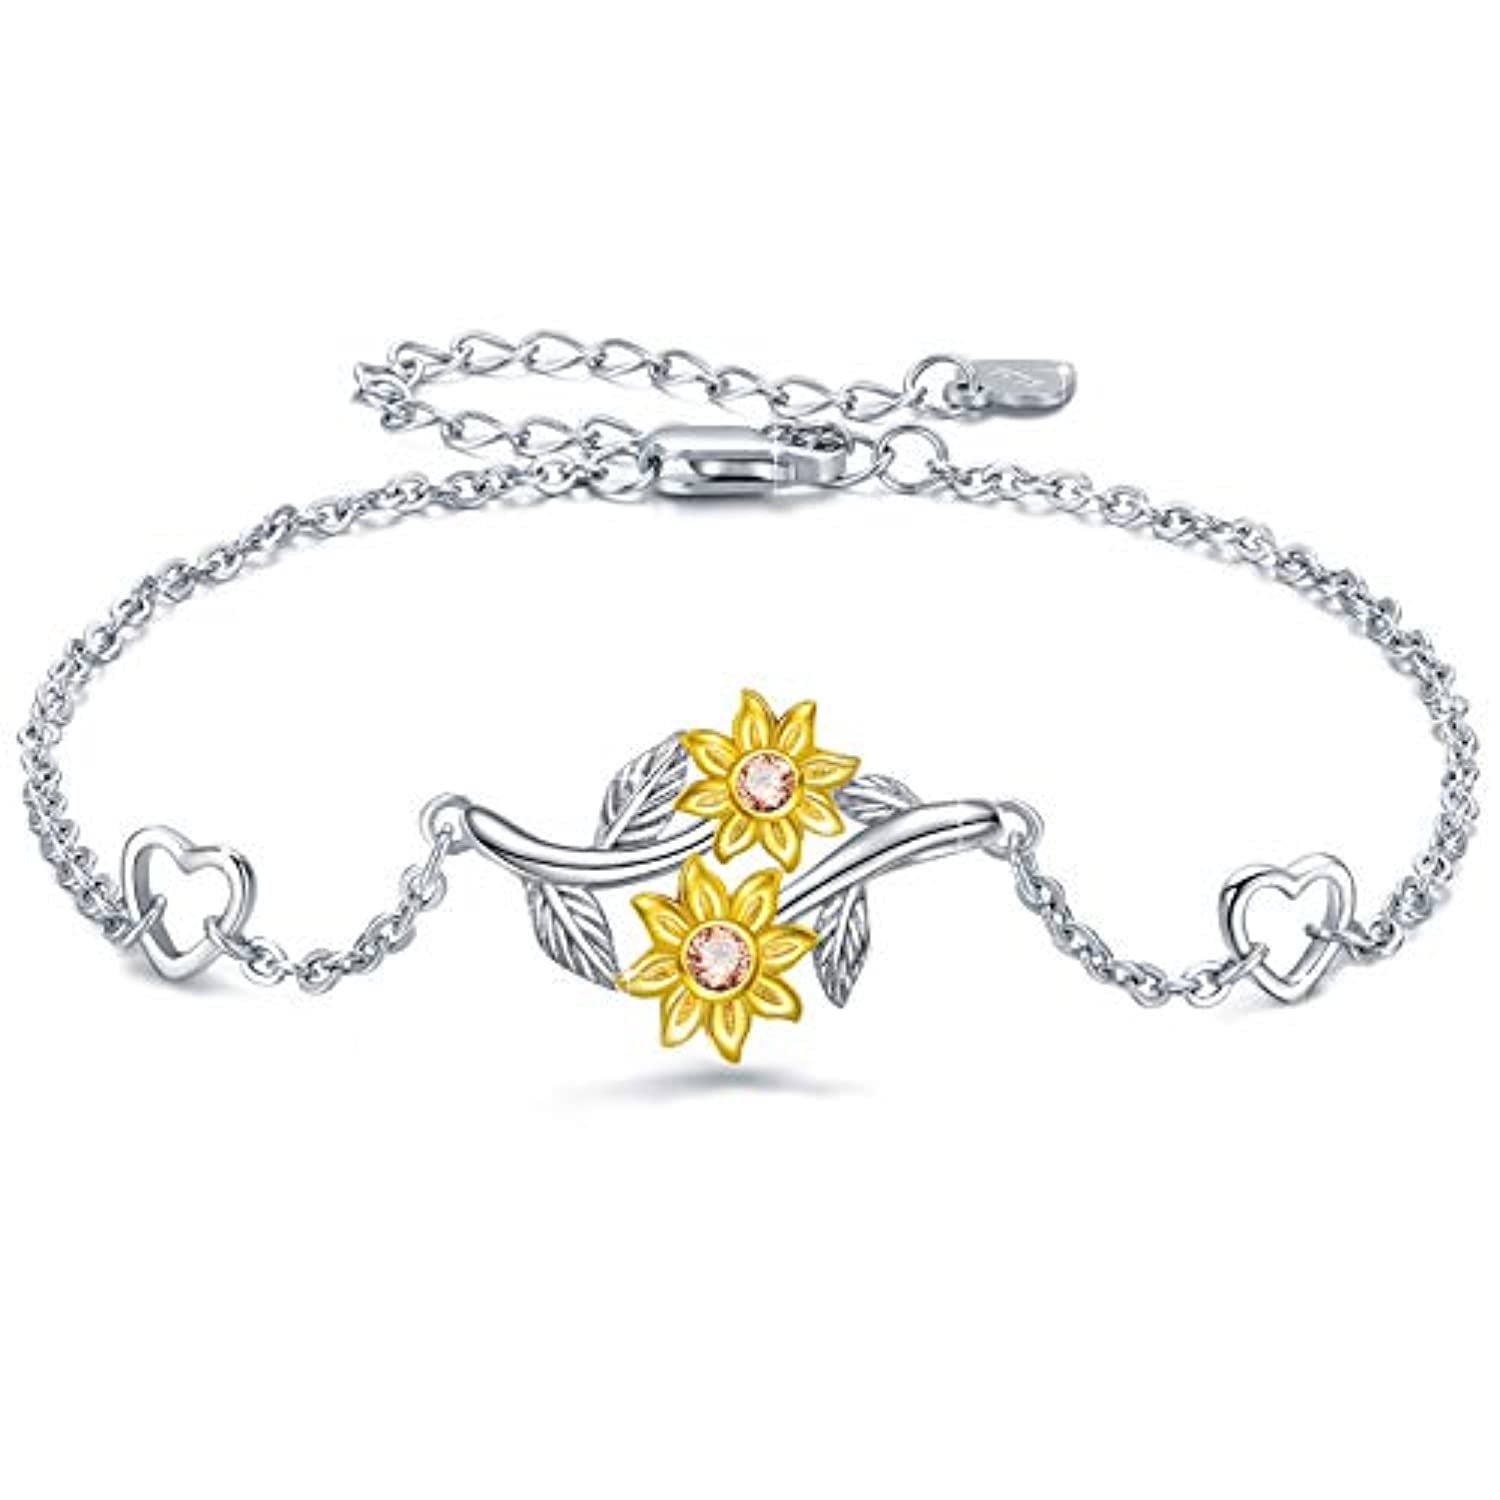 Silver Sunflower Bracelet Jewelry 